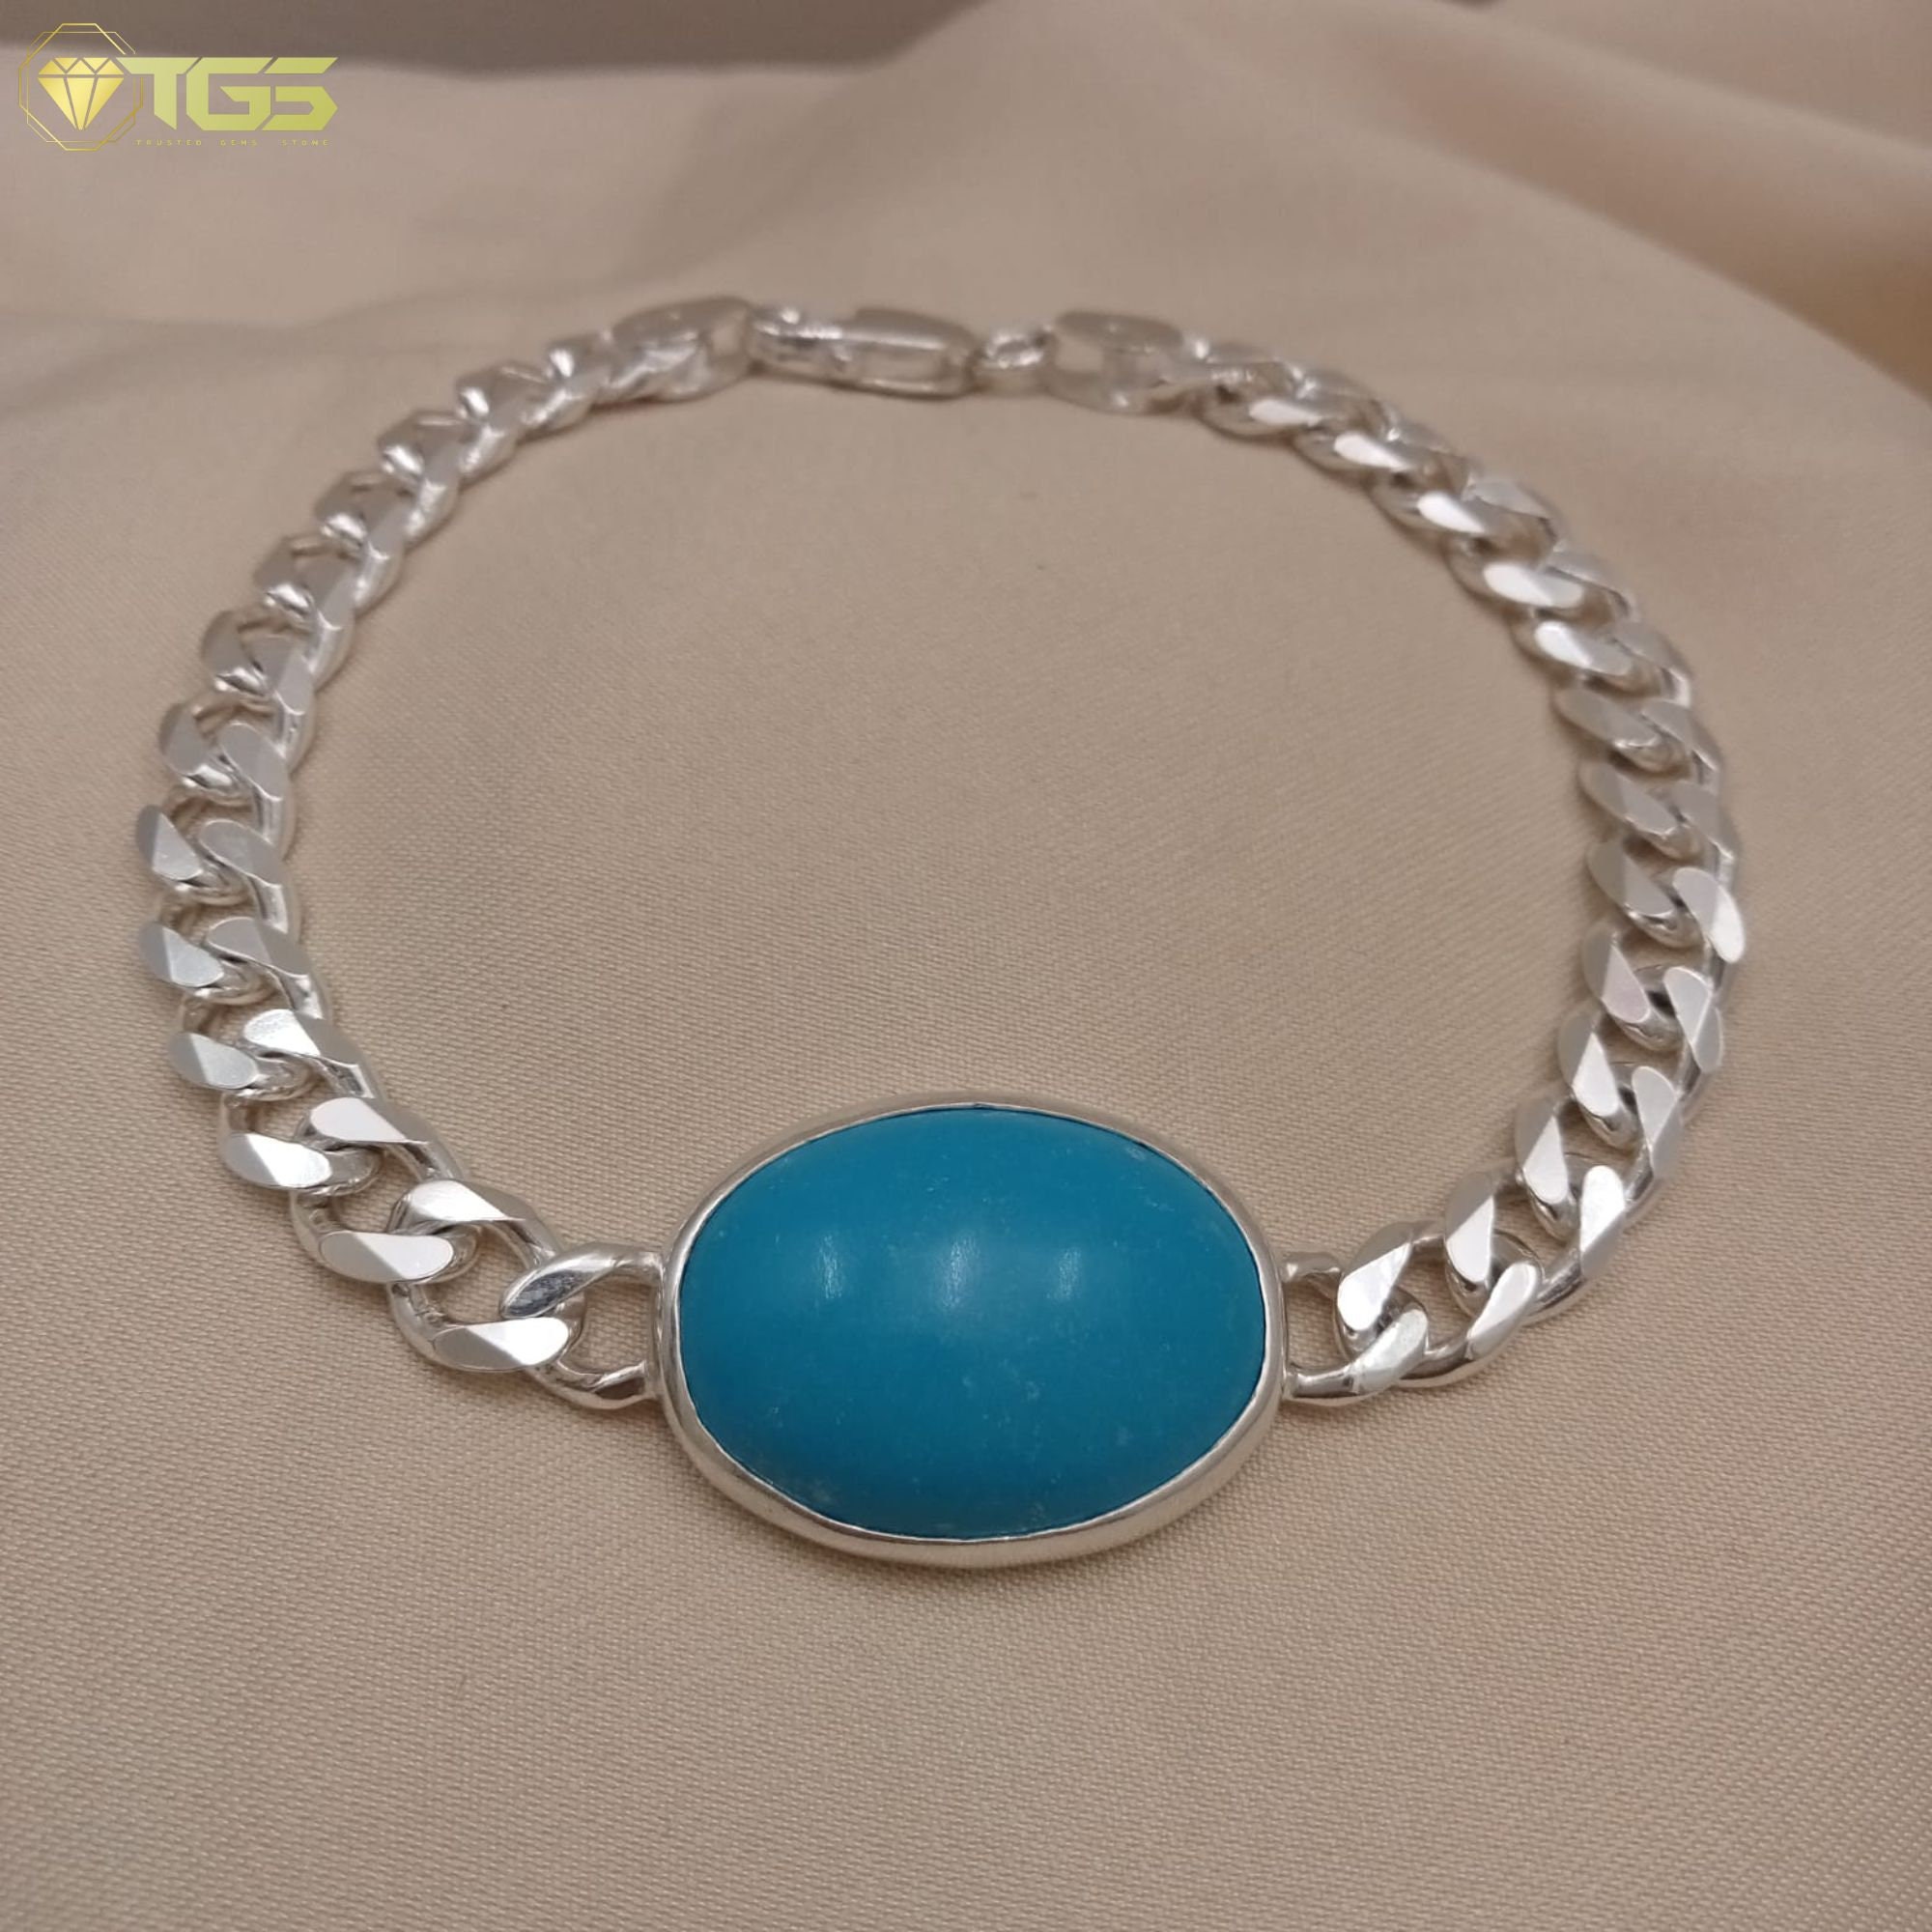 Turquoise (Firoza) bracelet - Spirital